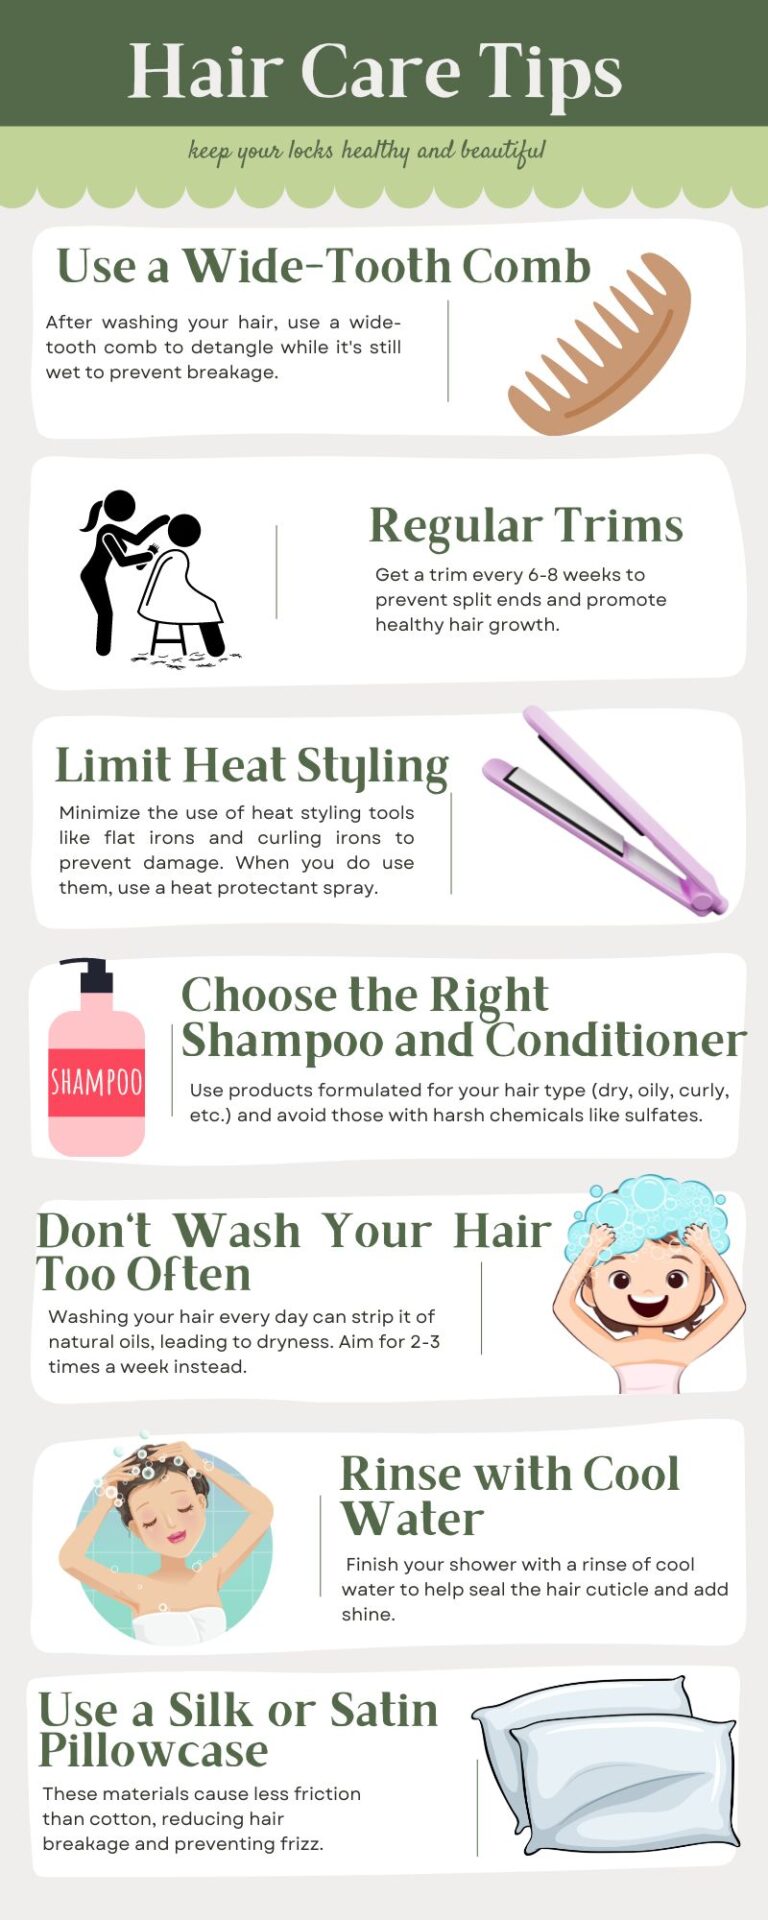 hair care tips 1 for gorgeous locks